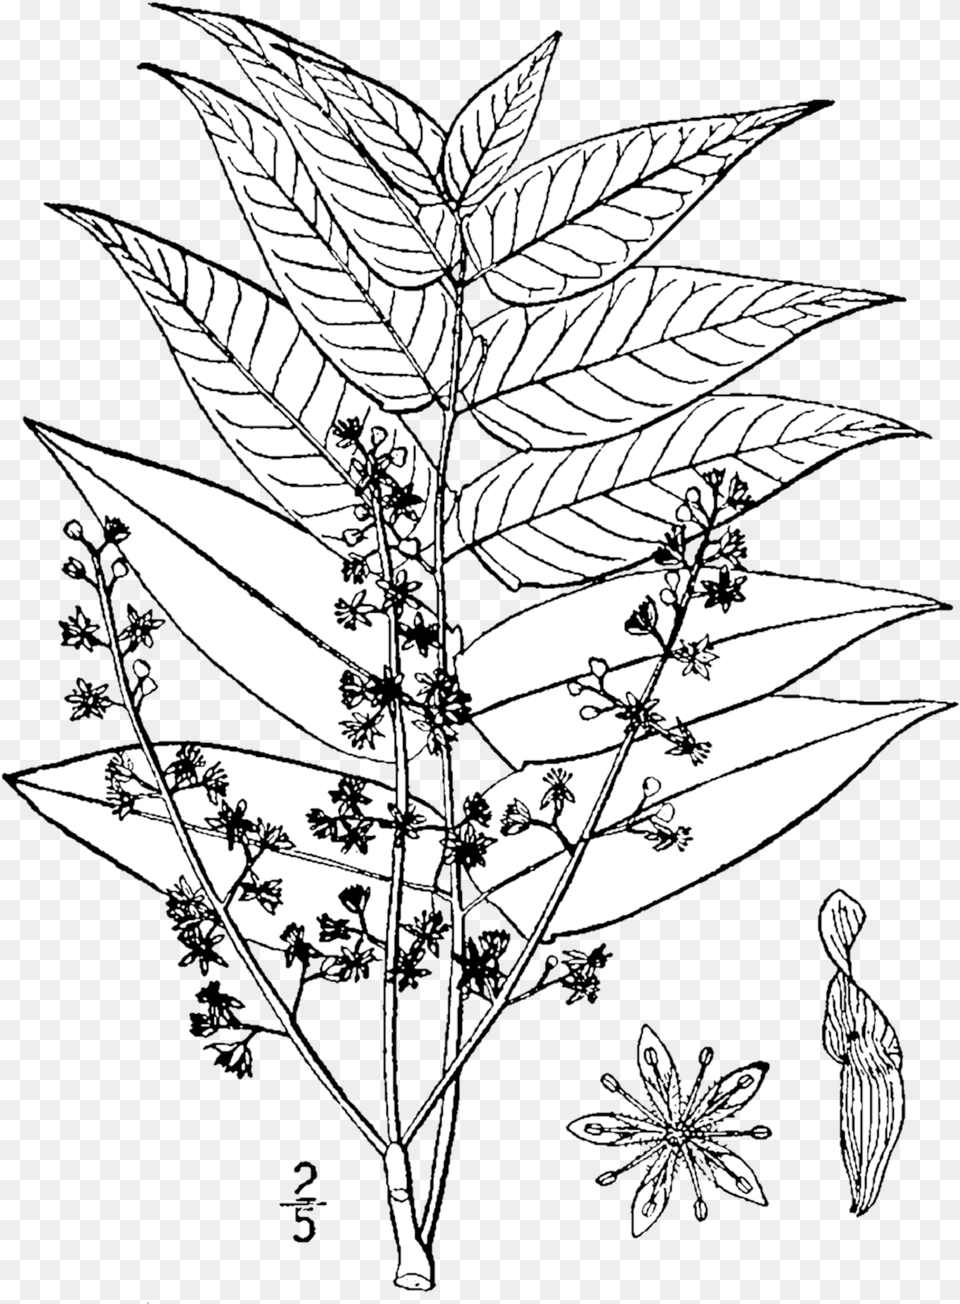 Fileailanthus Altissima Drawingpng Wikimedia Commons Ailanthus Altissima Hand Drawing, Art, Leaf, Plant, Pattern Free Transparent Png